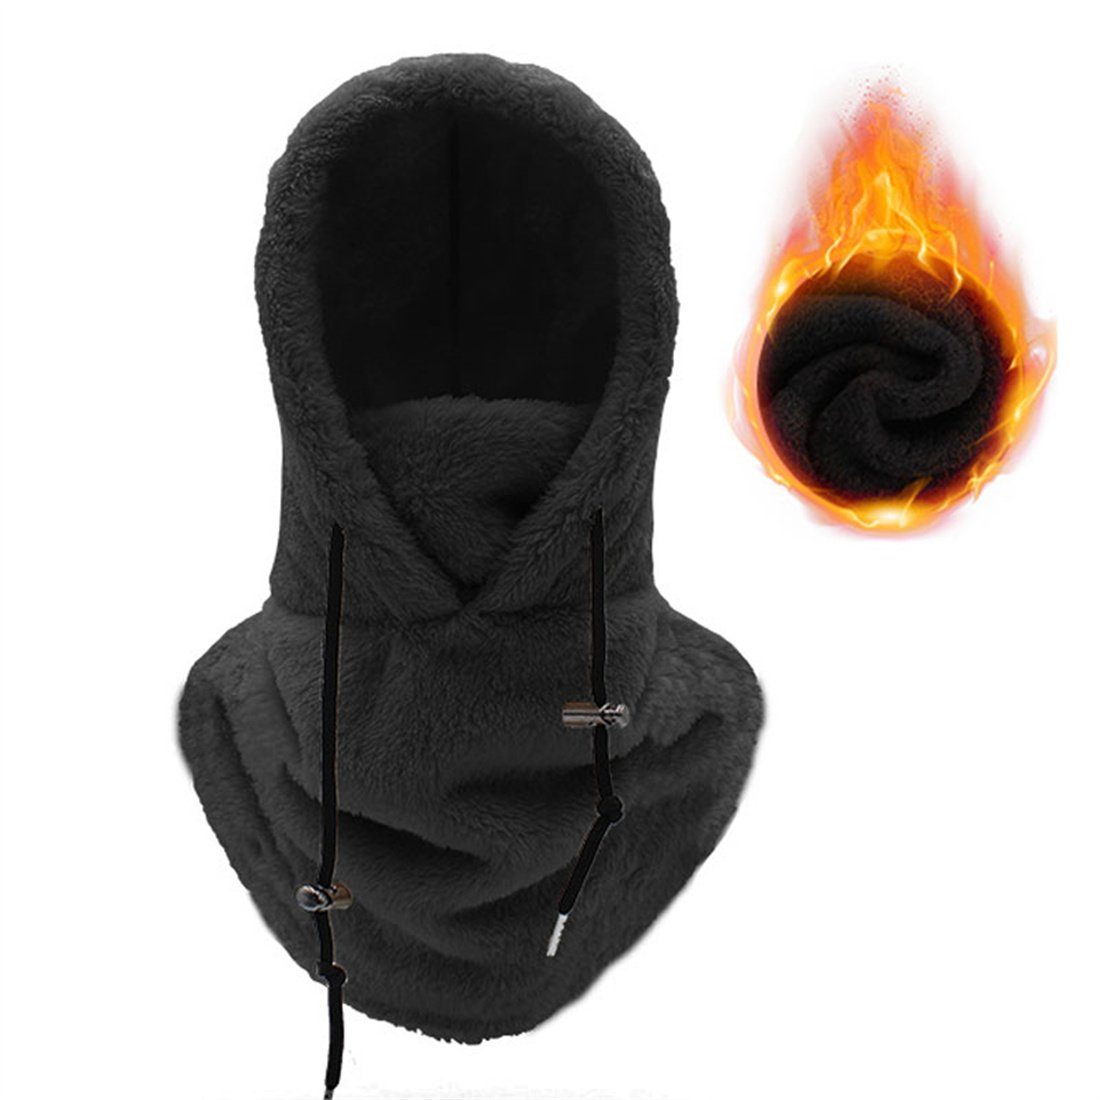 DÖRÖY Sturmhaube Maske,Multifunktionale Schwarz Reiten Kopfbedeckung Winter Warme Ski Windproof